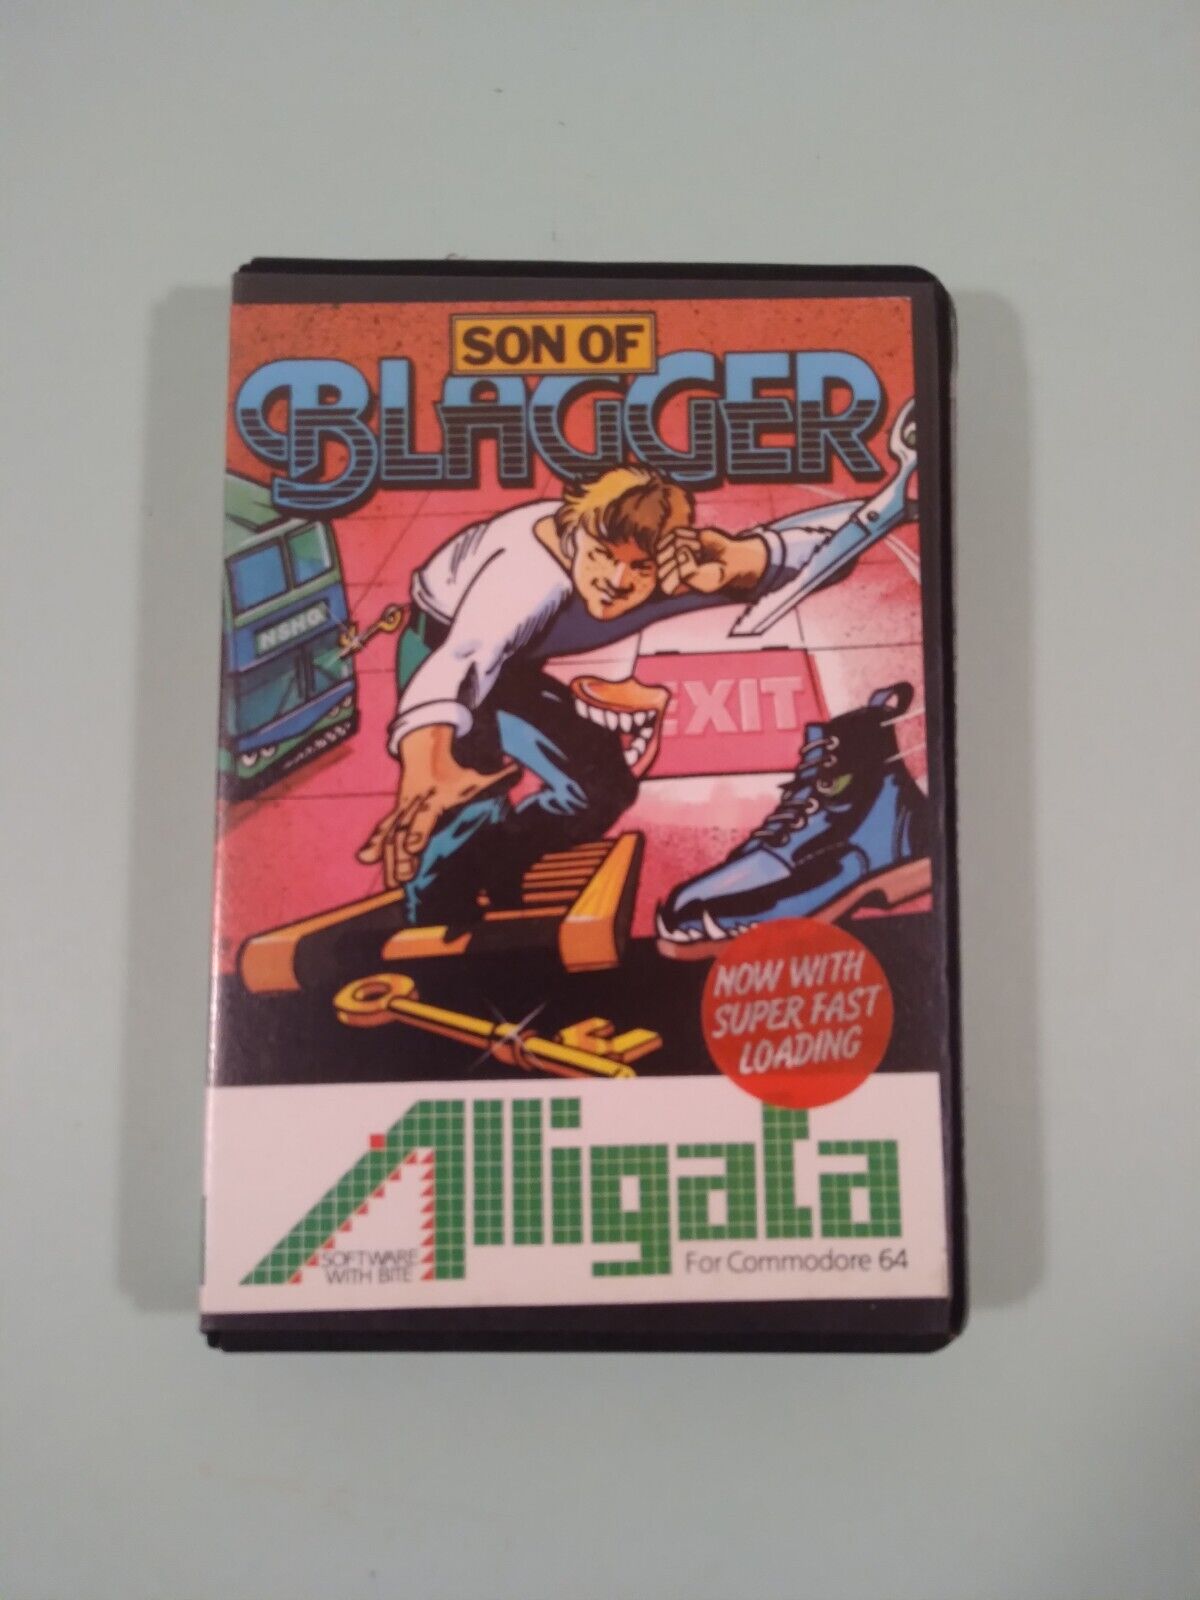 Commodore 64 C64 Game Cassette Alligata UK vtg retro SOFTWARE Son of Blancher 